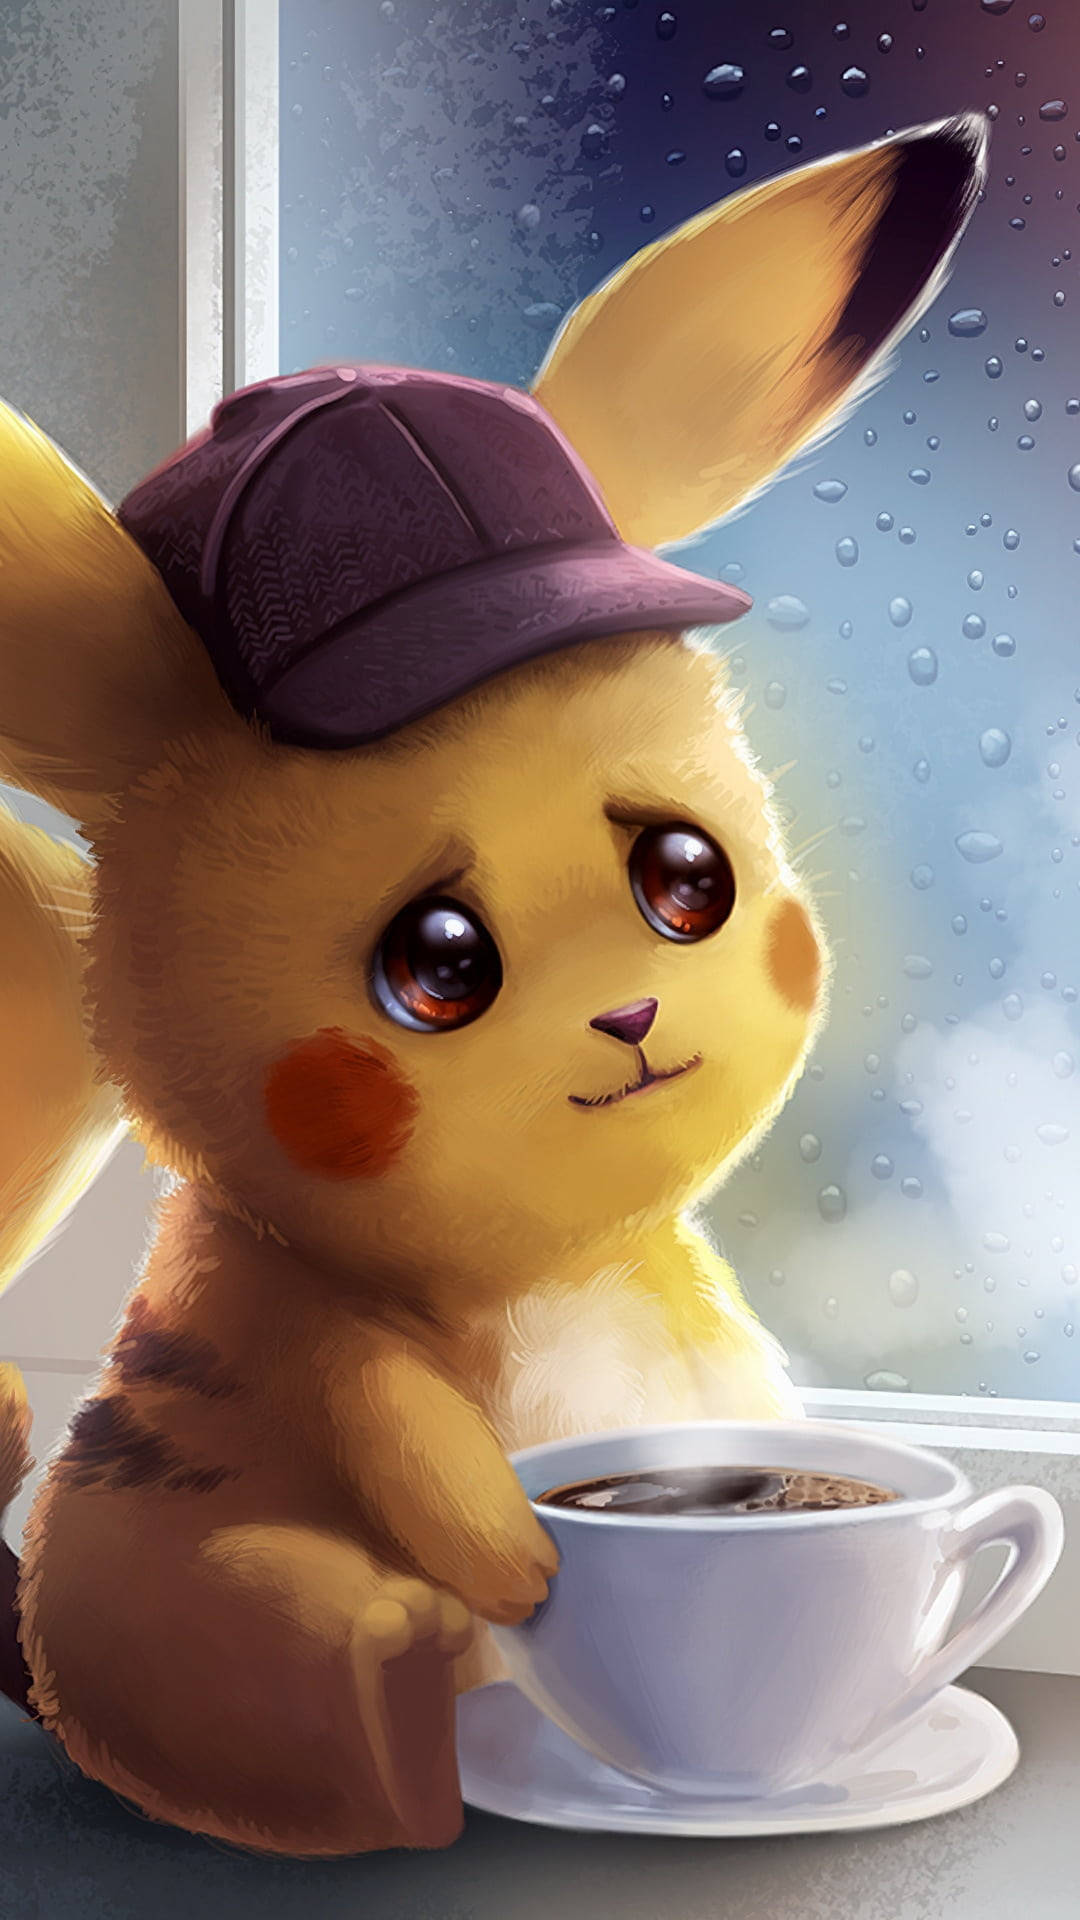 Sad Pikachu Pokemon Hd Background